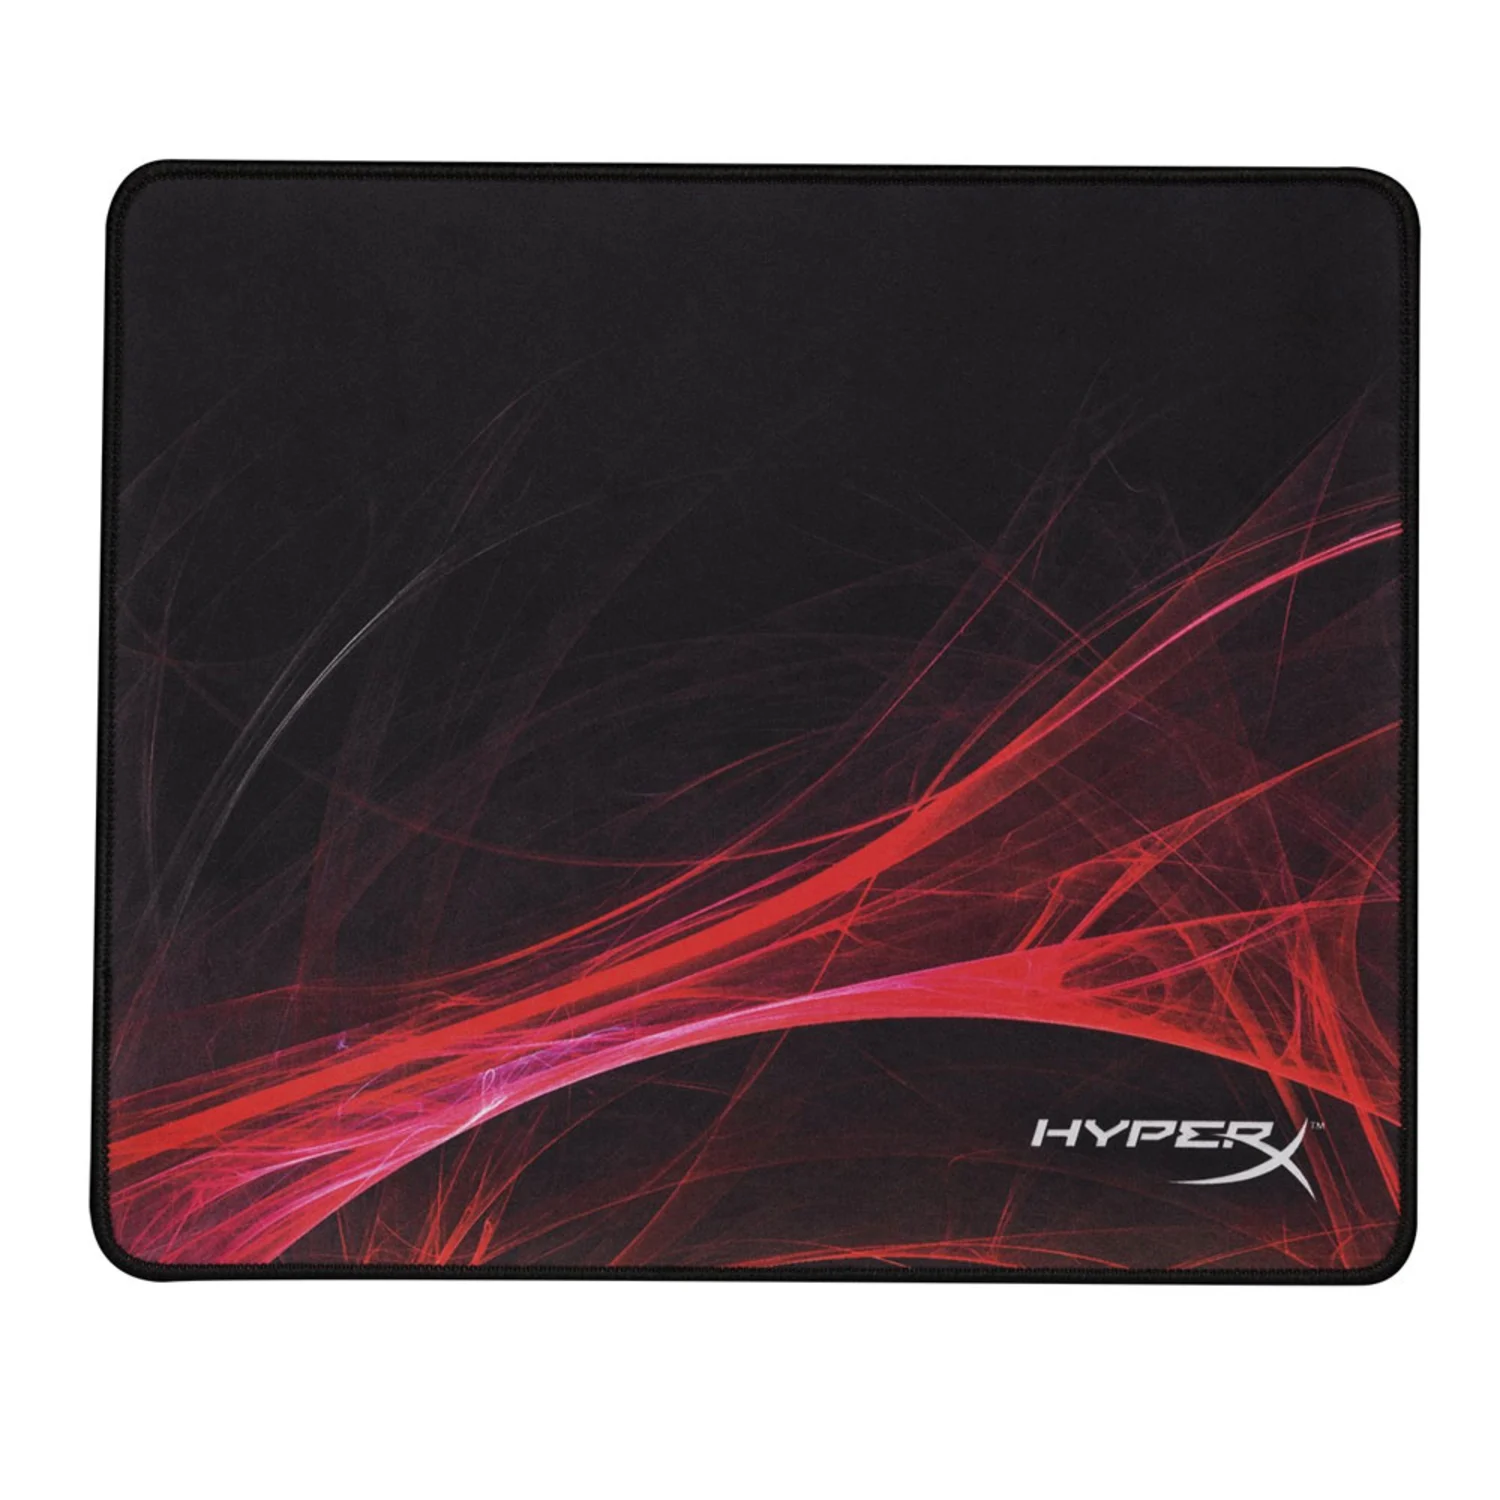 Mousepad Kingston Hyper X Fury Pro Medium Speed Edition  - Preto (HX-MPFS-S-M)